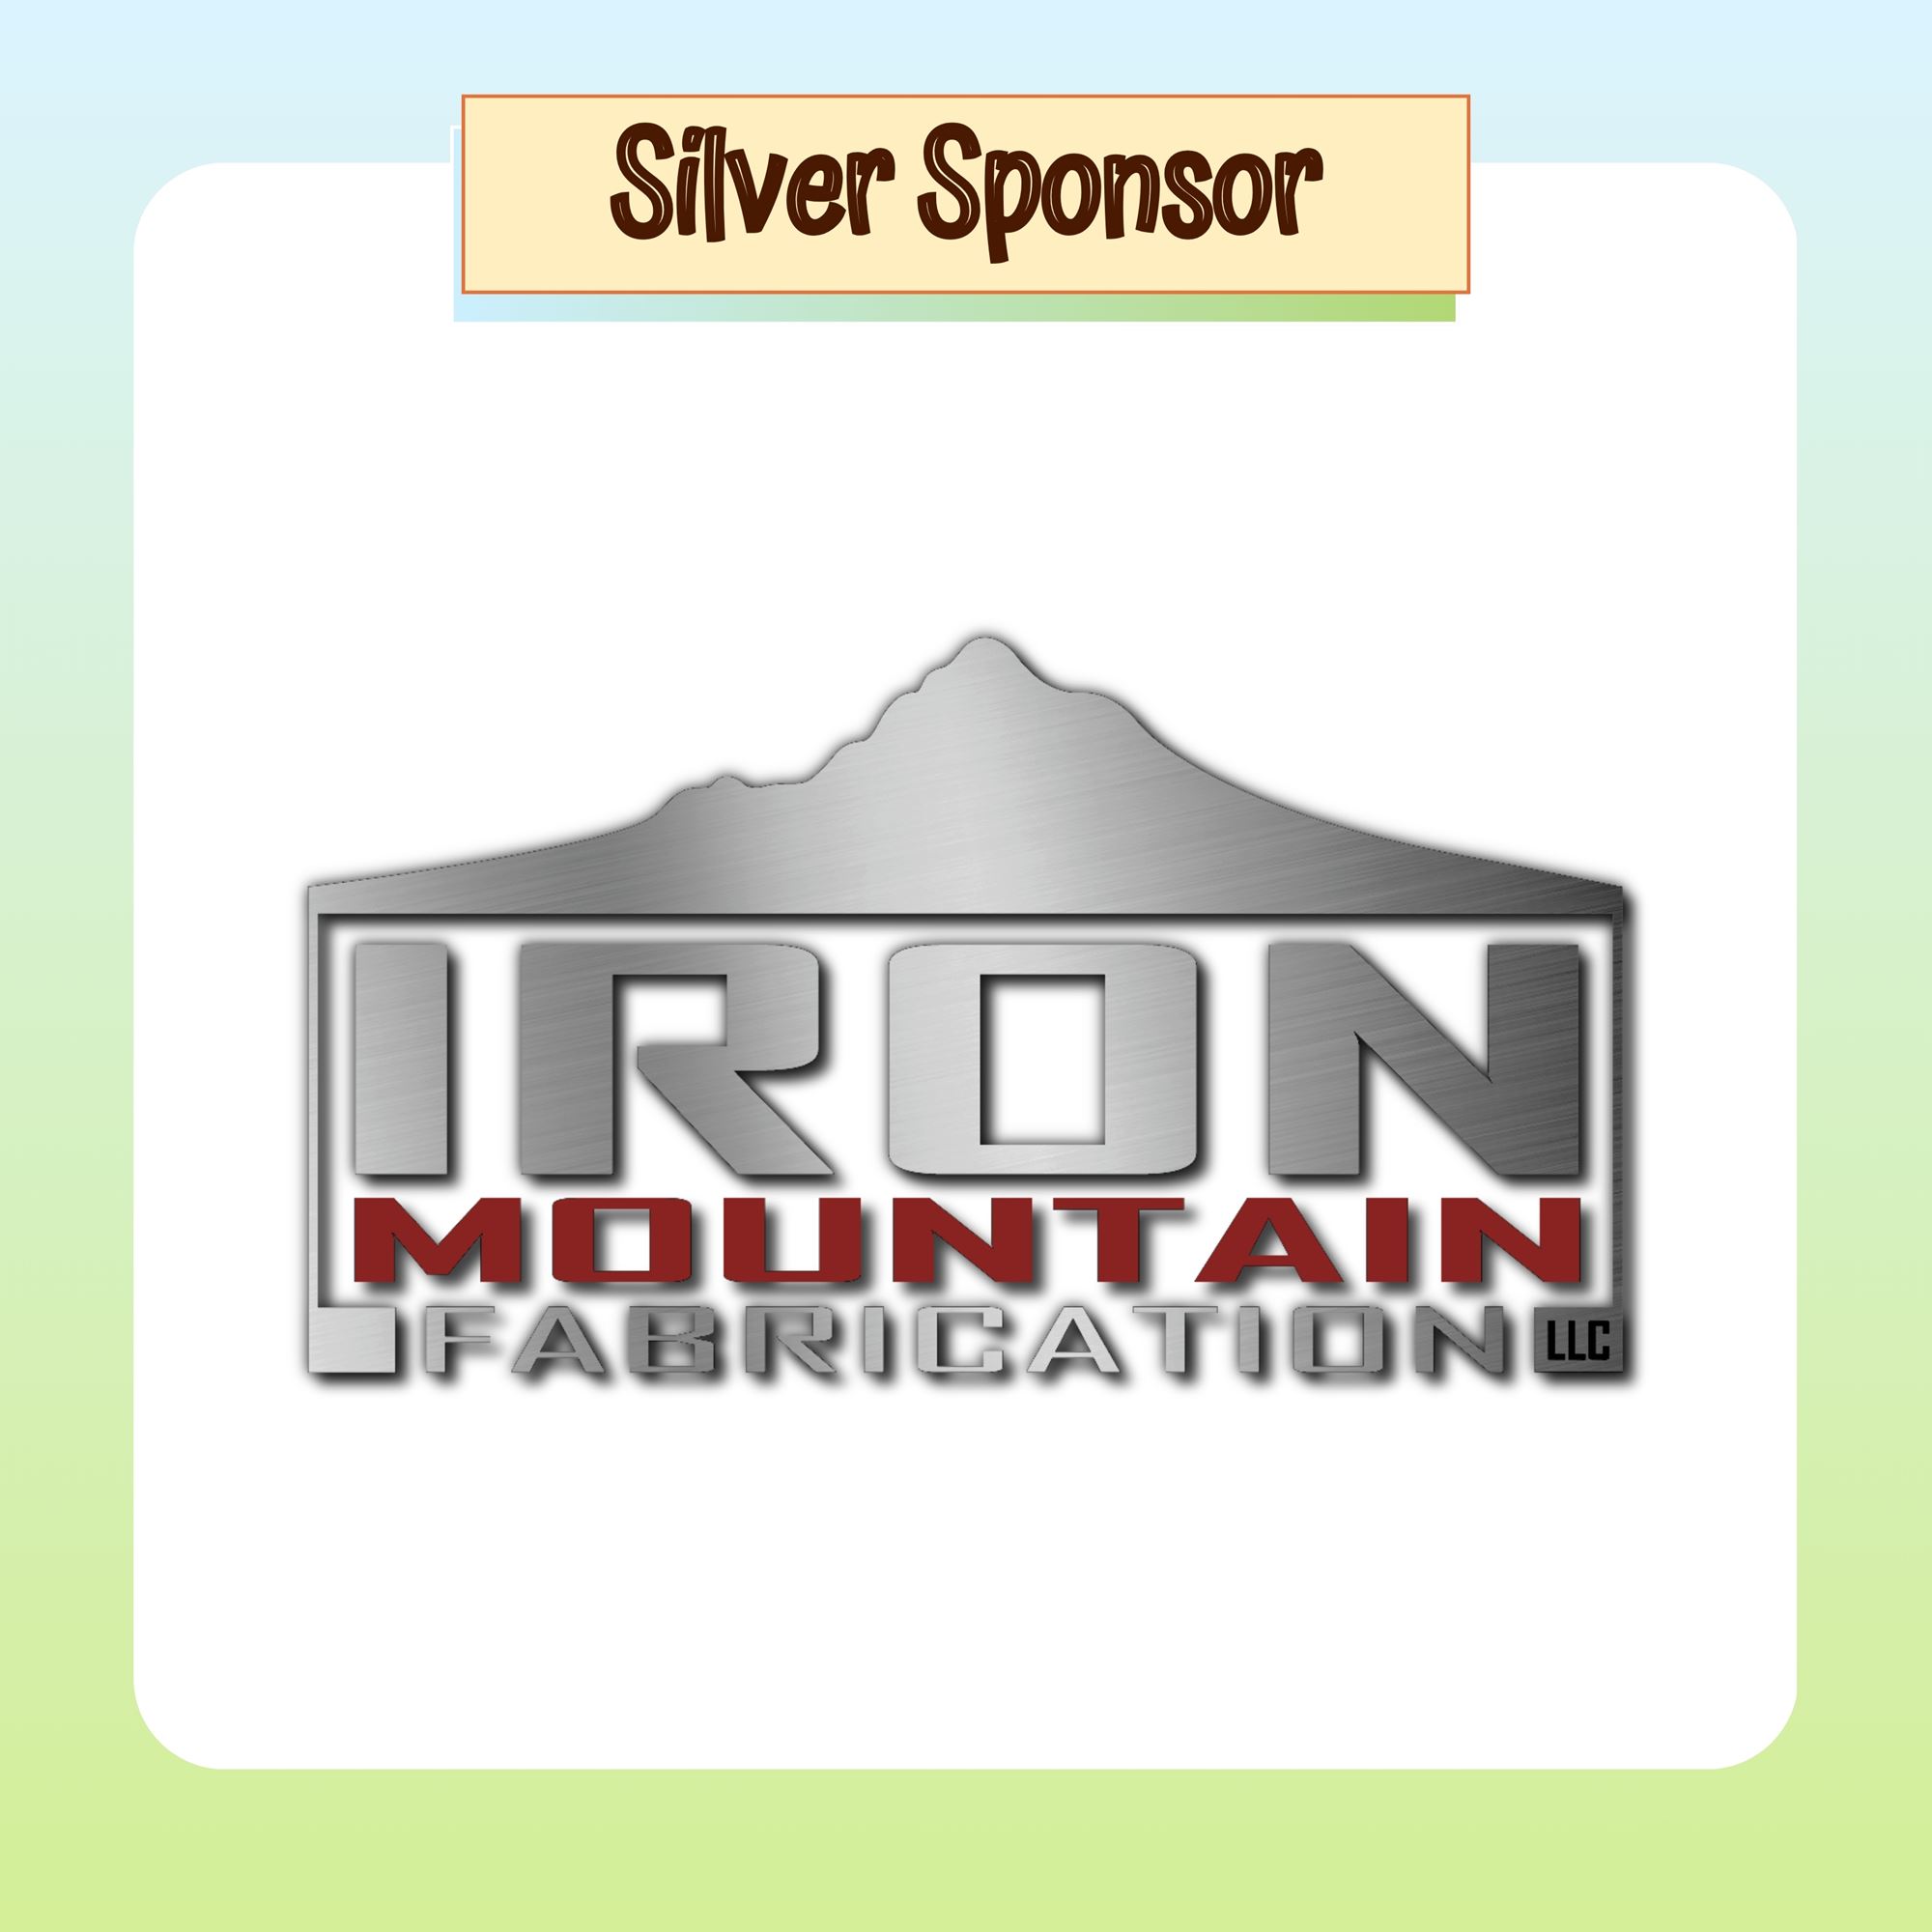 Silver Sponsor: Iron Mountain Fabrication, LLC